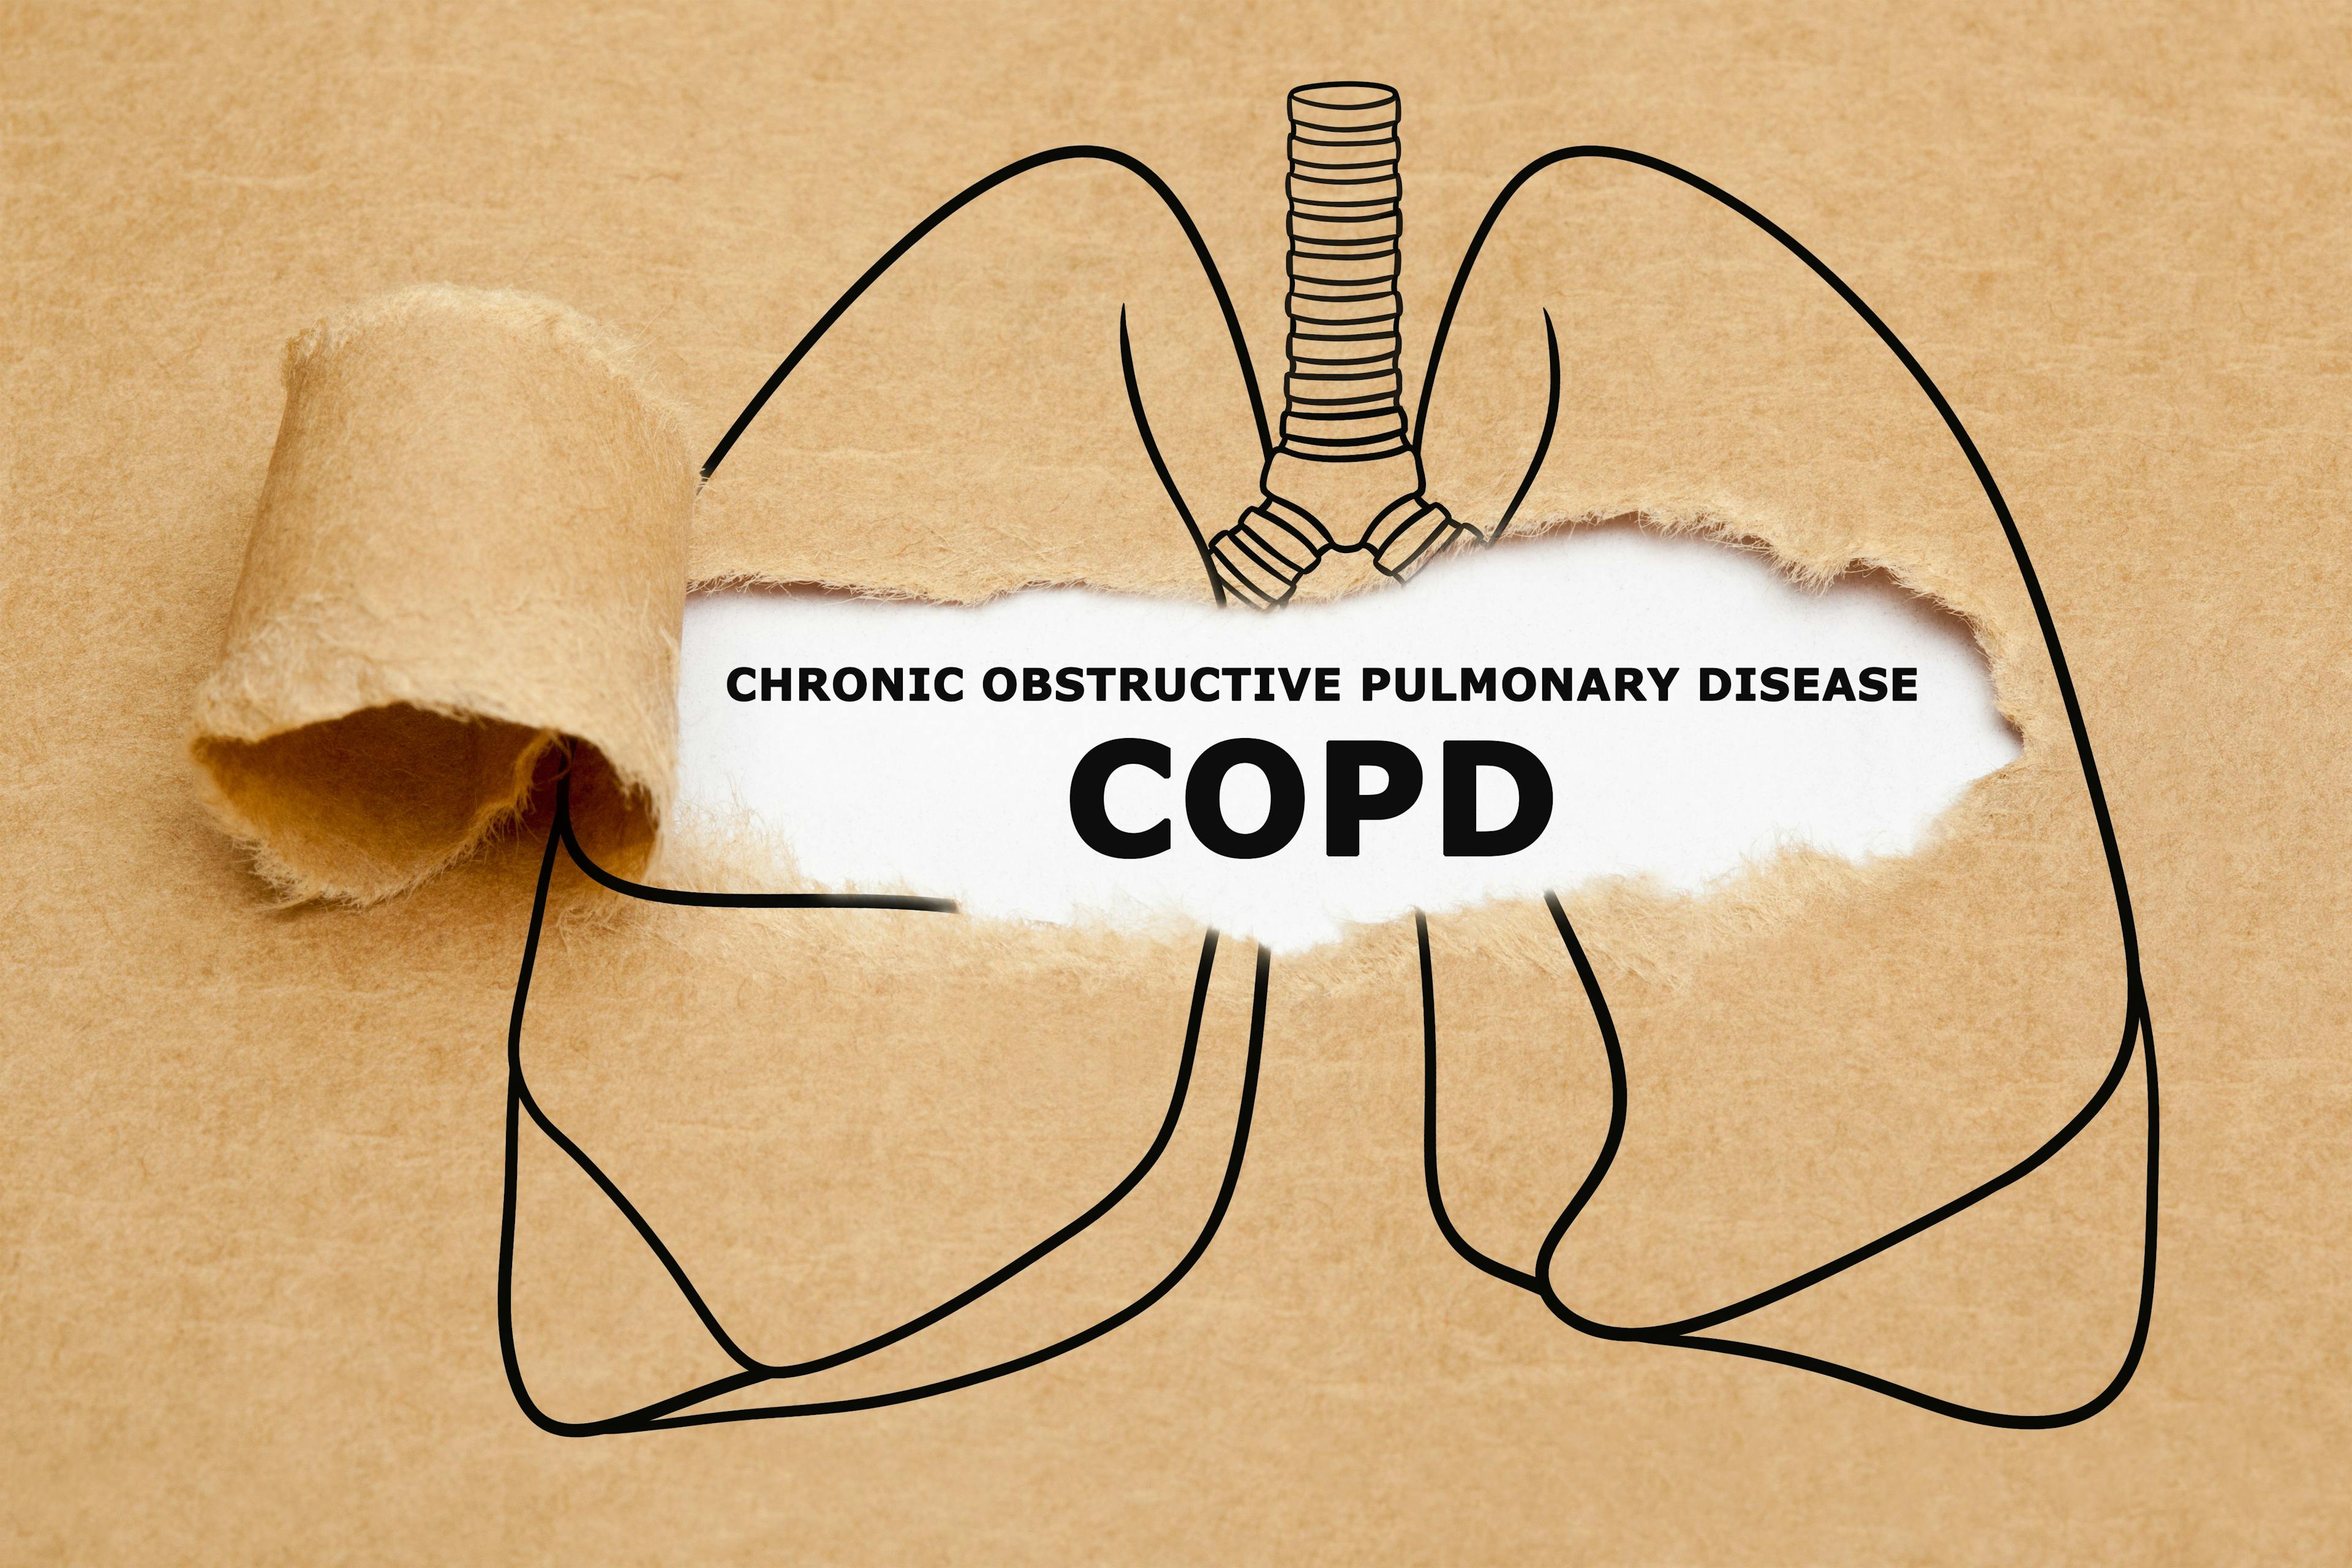 COPD drawing | Image credit: Ivelin Radkov - stock.adobe.com